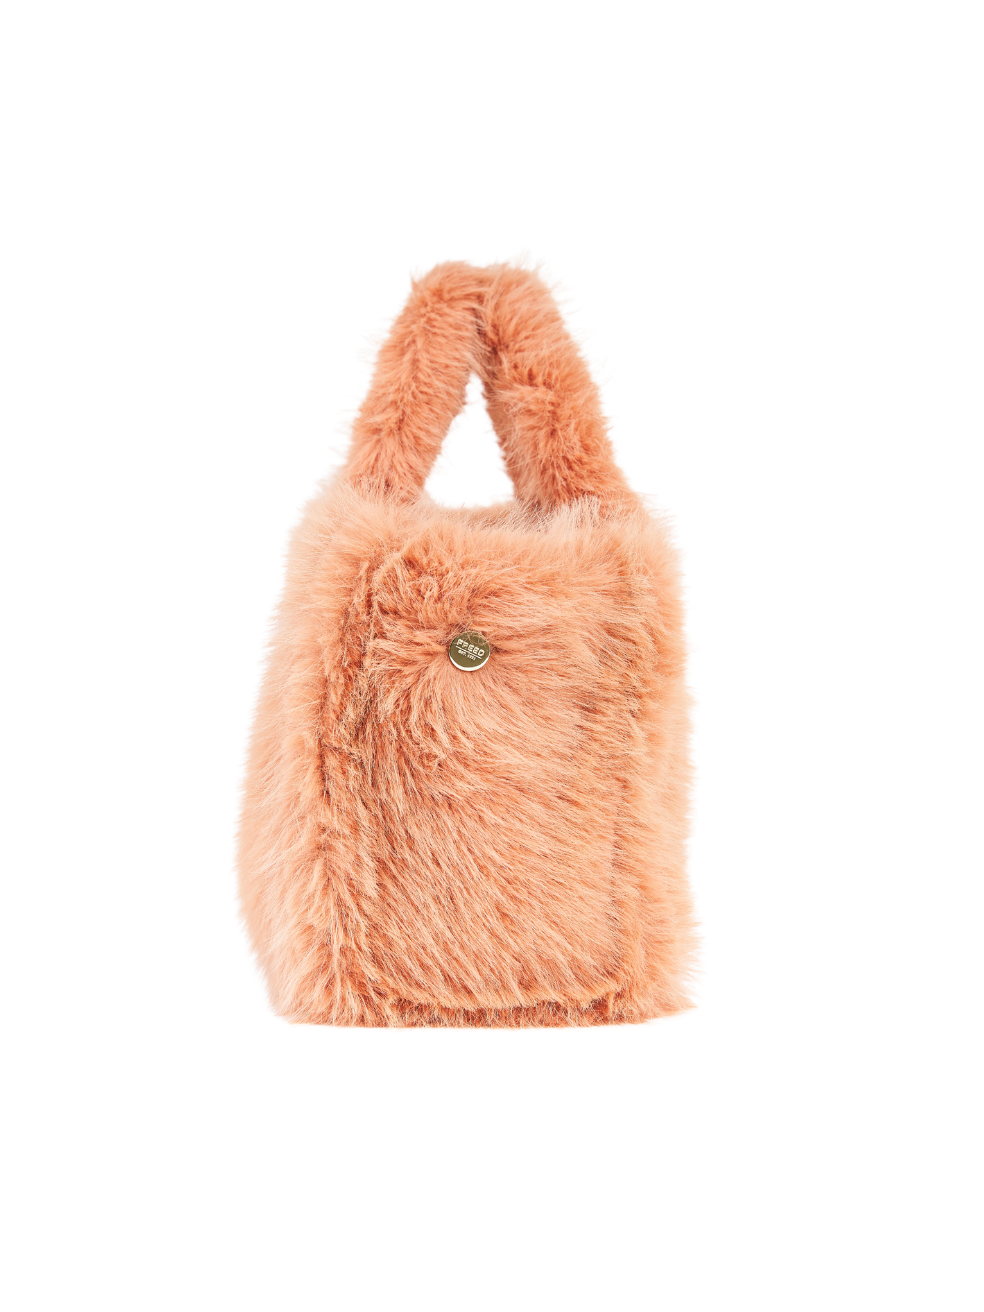 XL Large Tote Bag Apricot Ethical Long Fur Bag